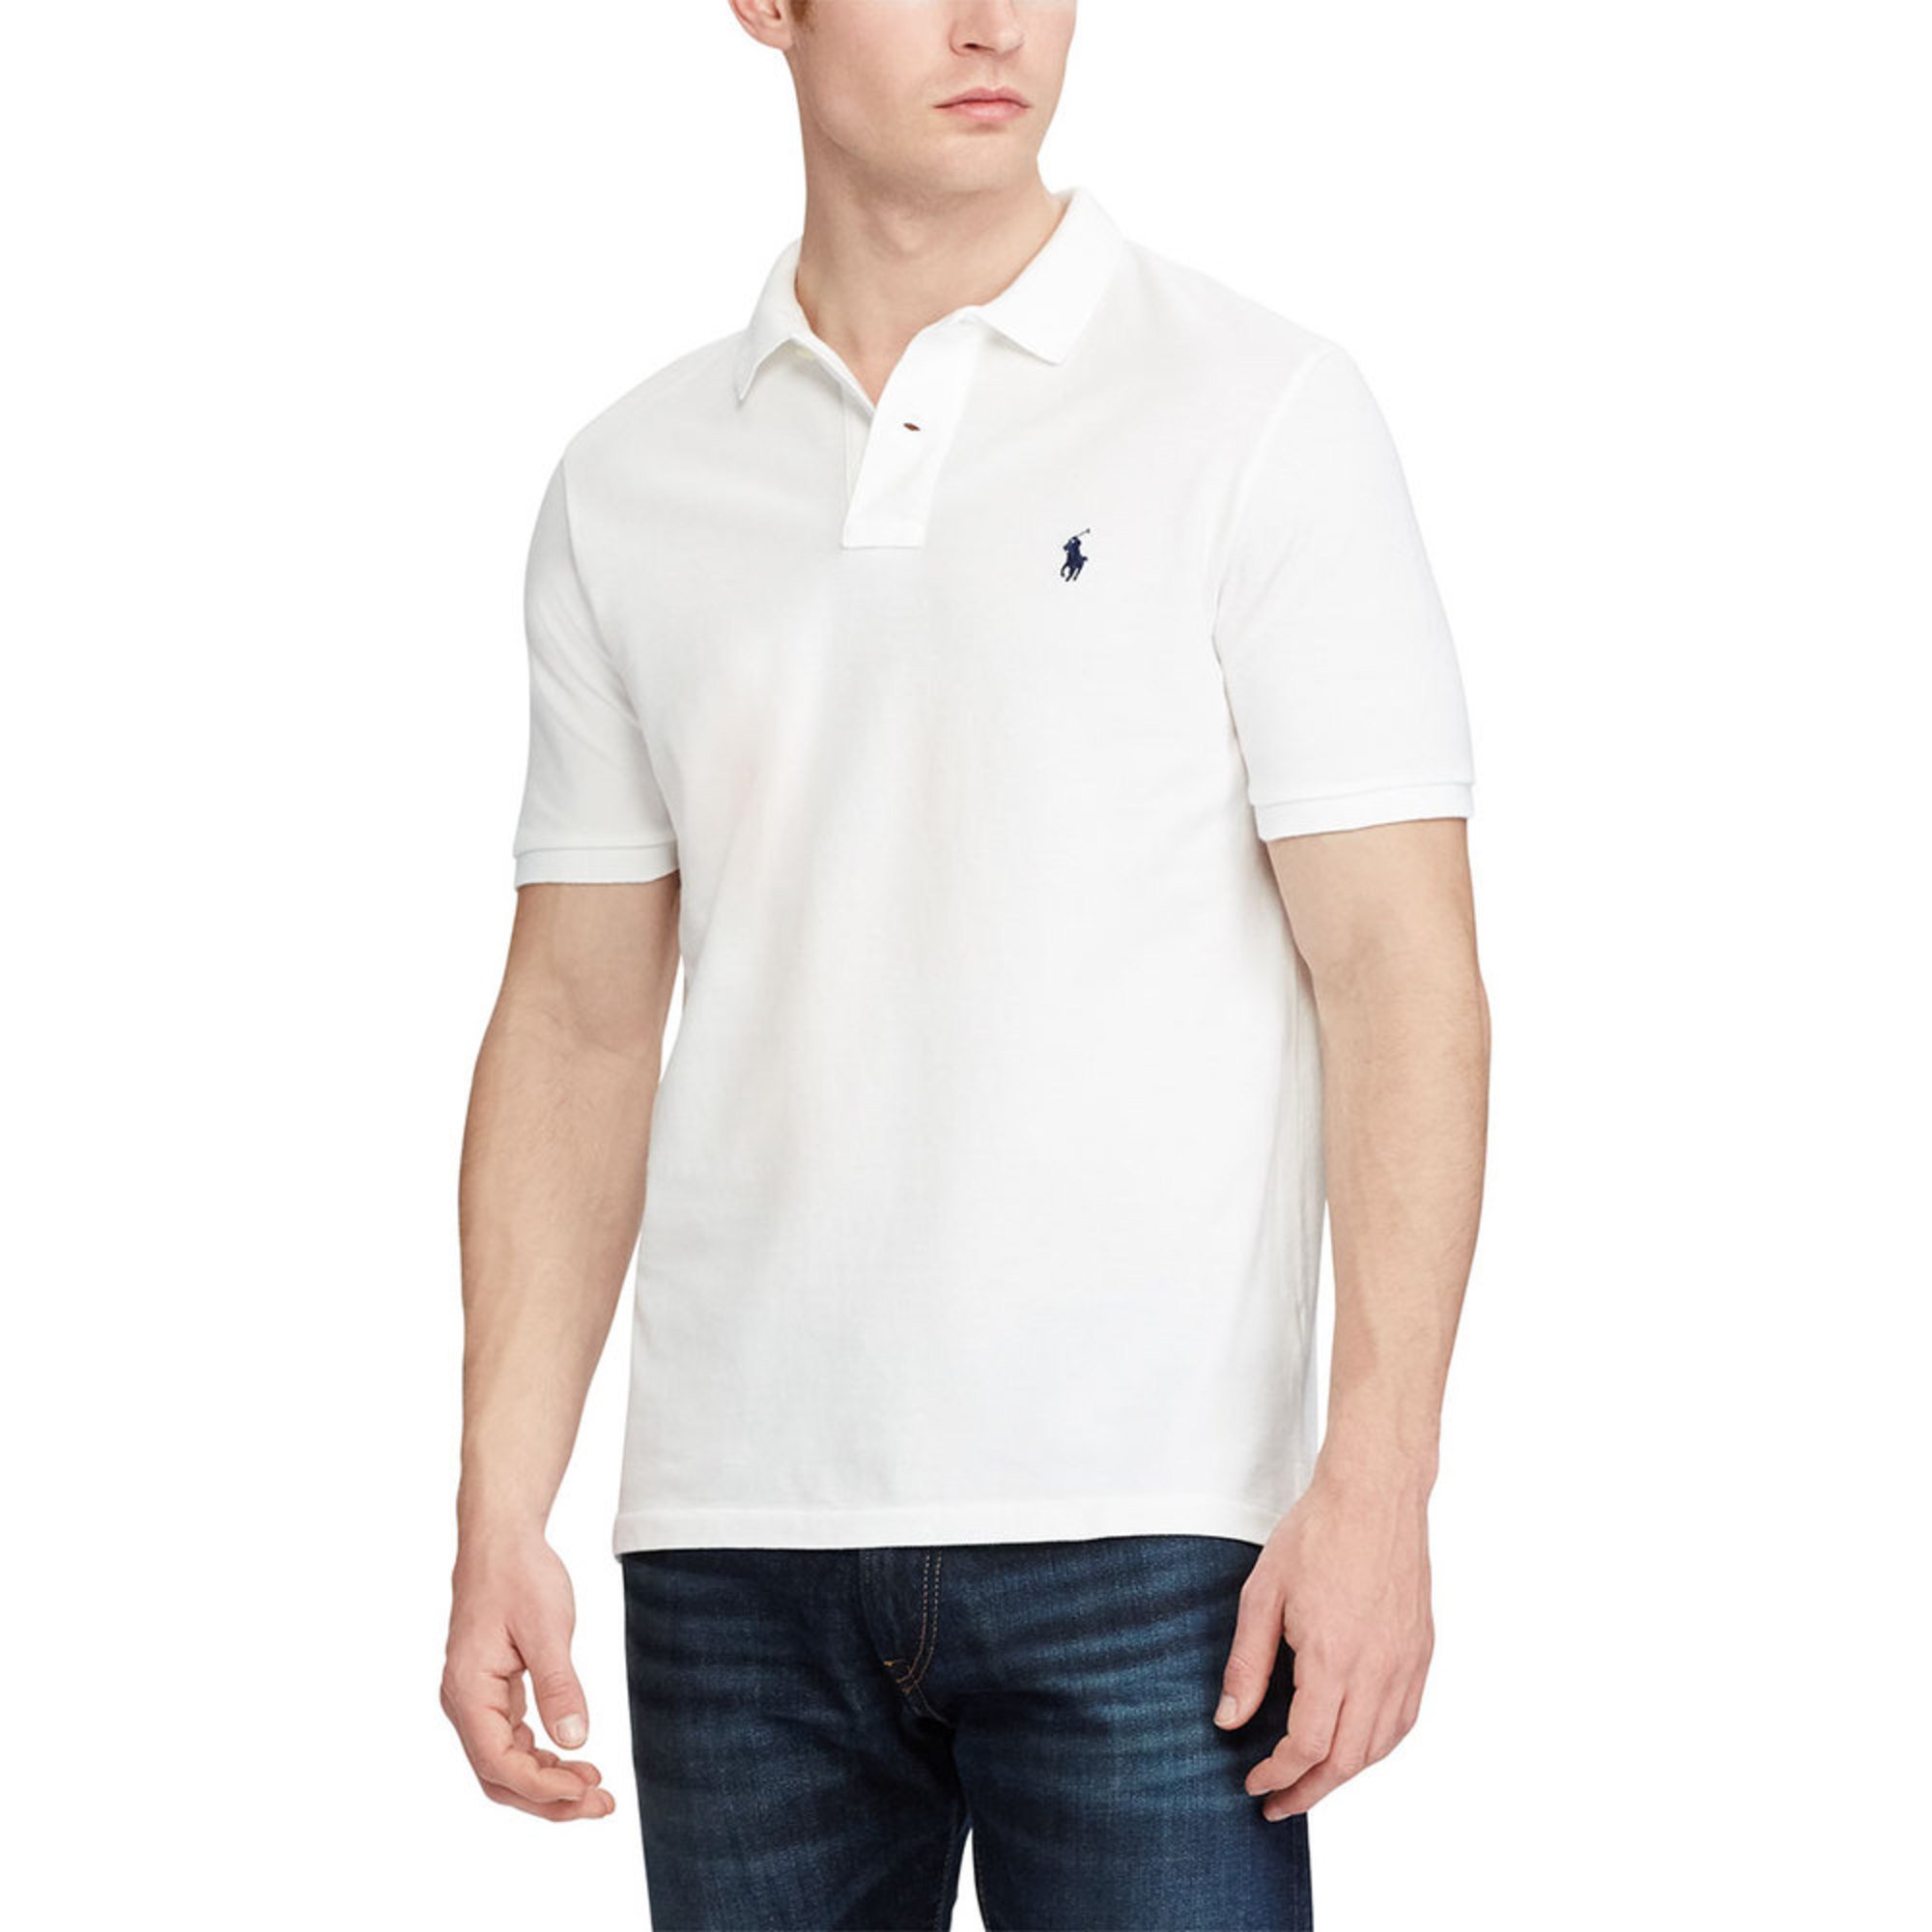 mens white short sleeve ralph lauren shirt